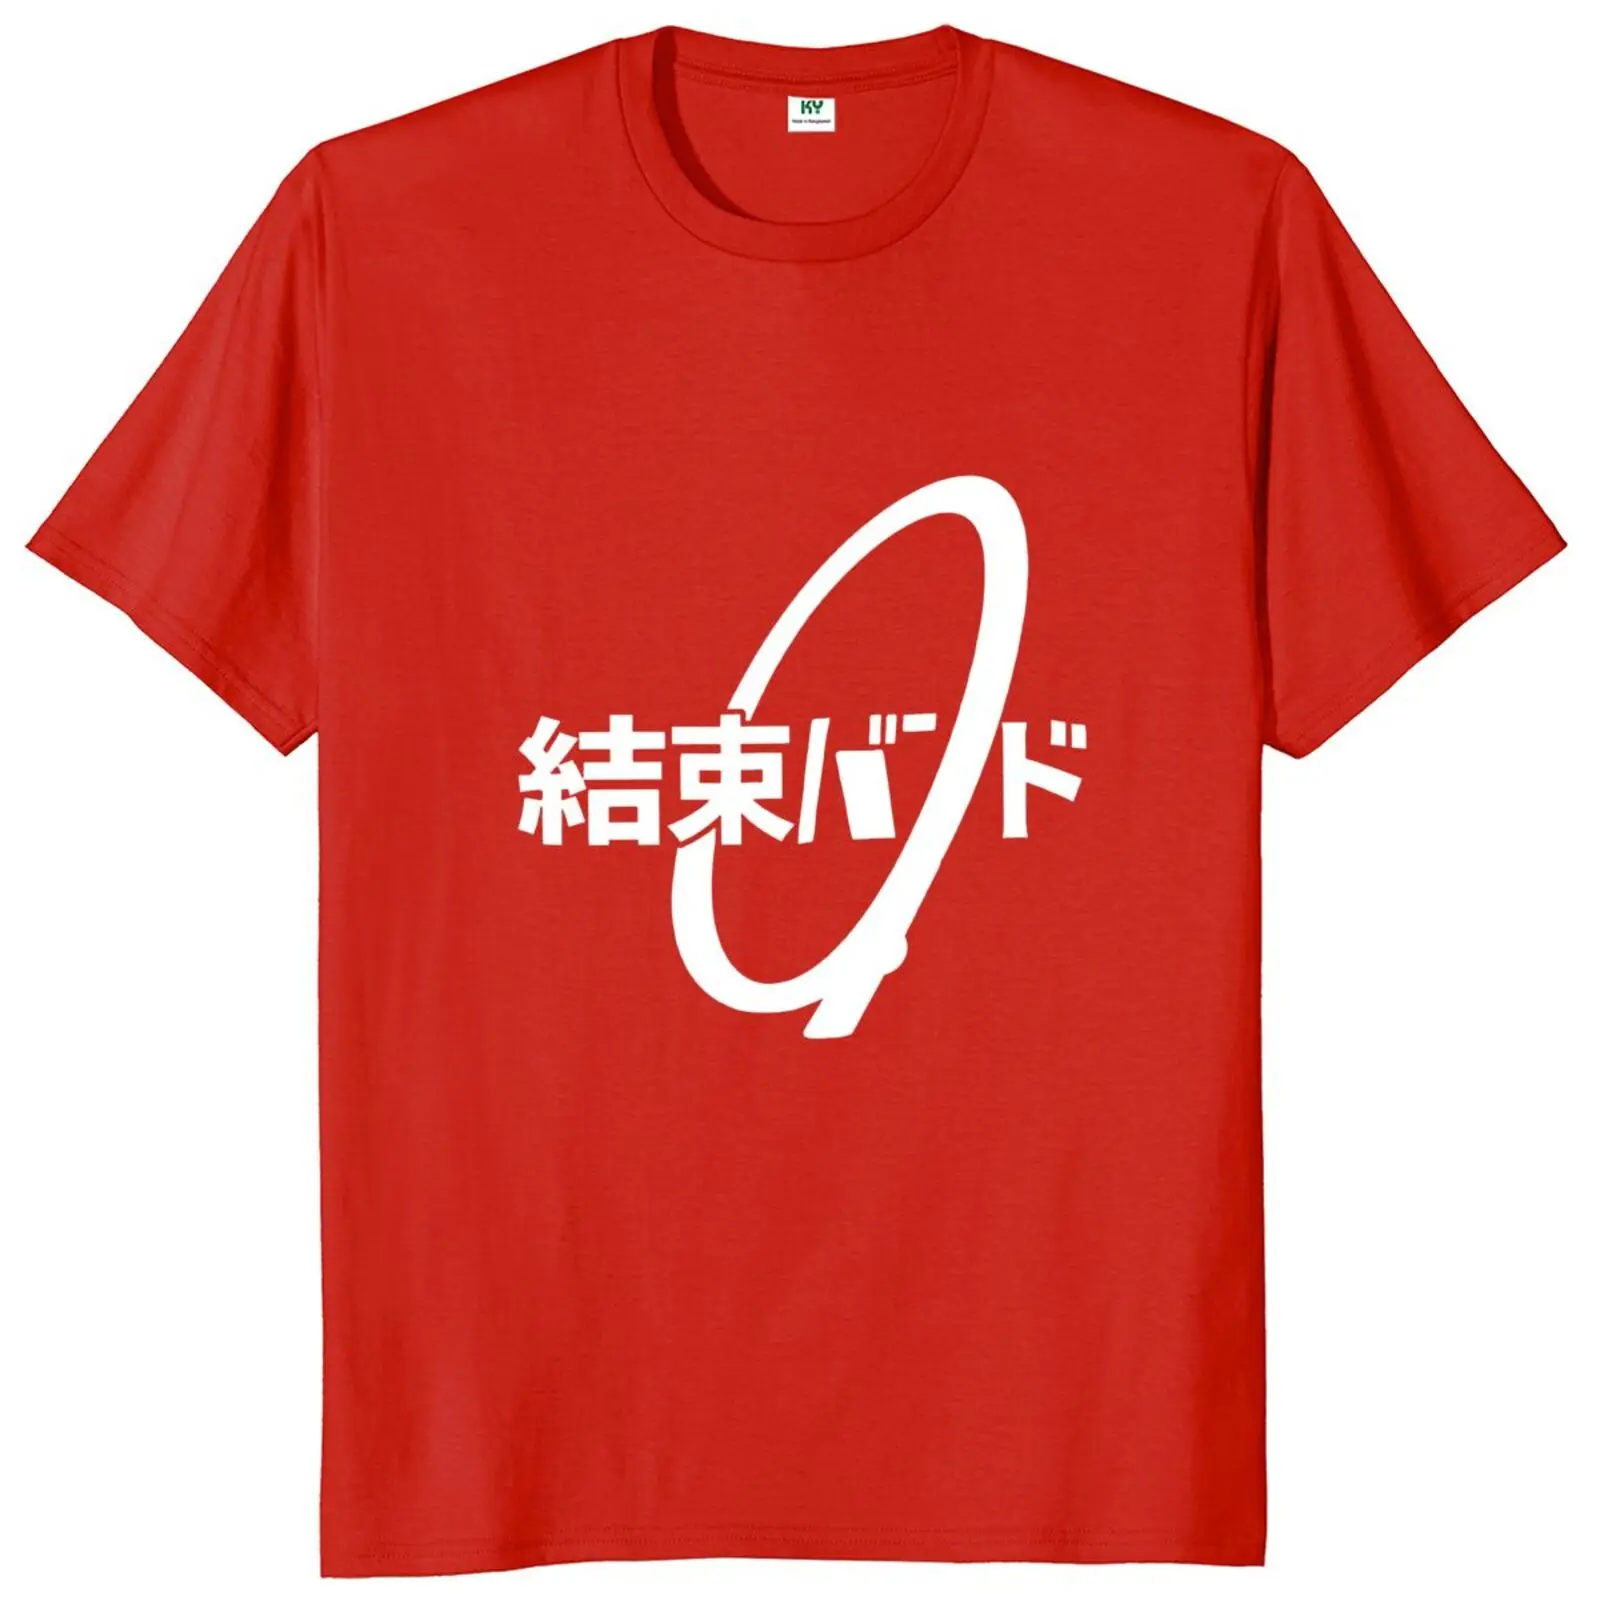 Fascetta kanji hiragana Kessoku Band Rocker Band T Shirt 100% cotone taglia ue top Tee